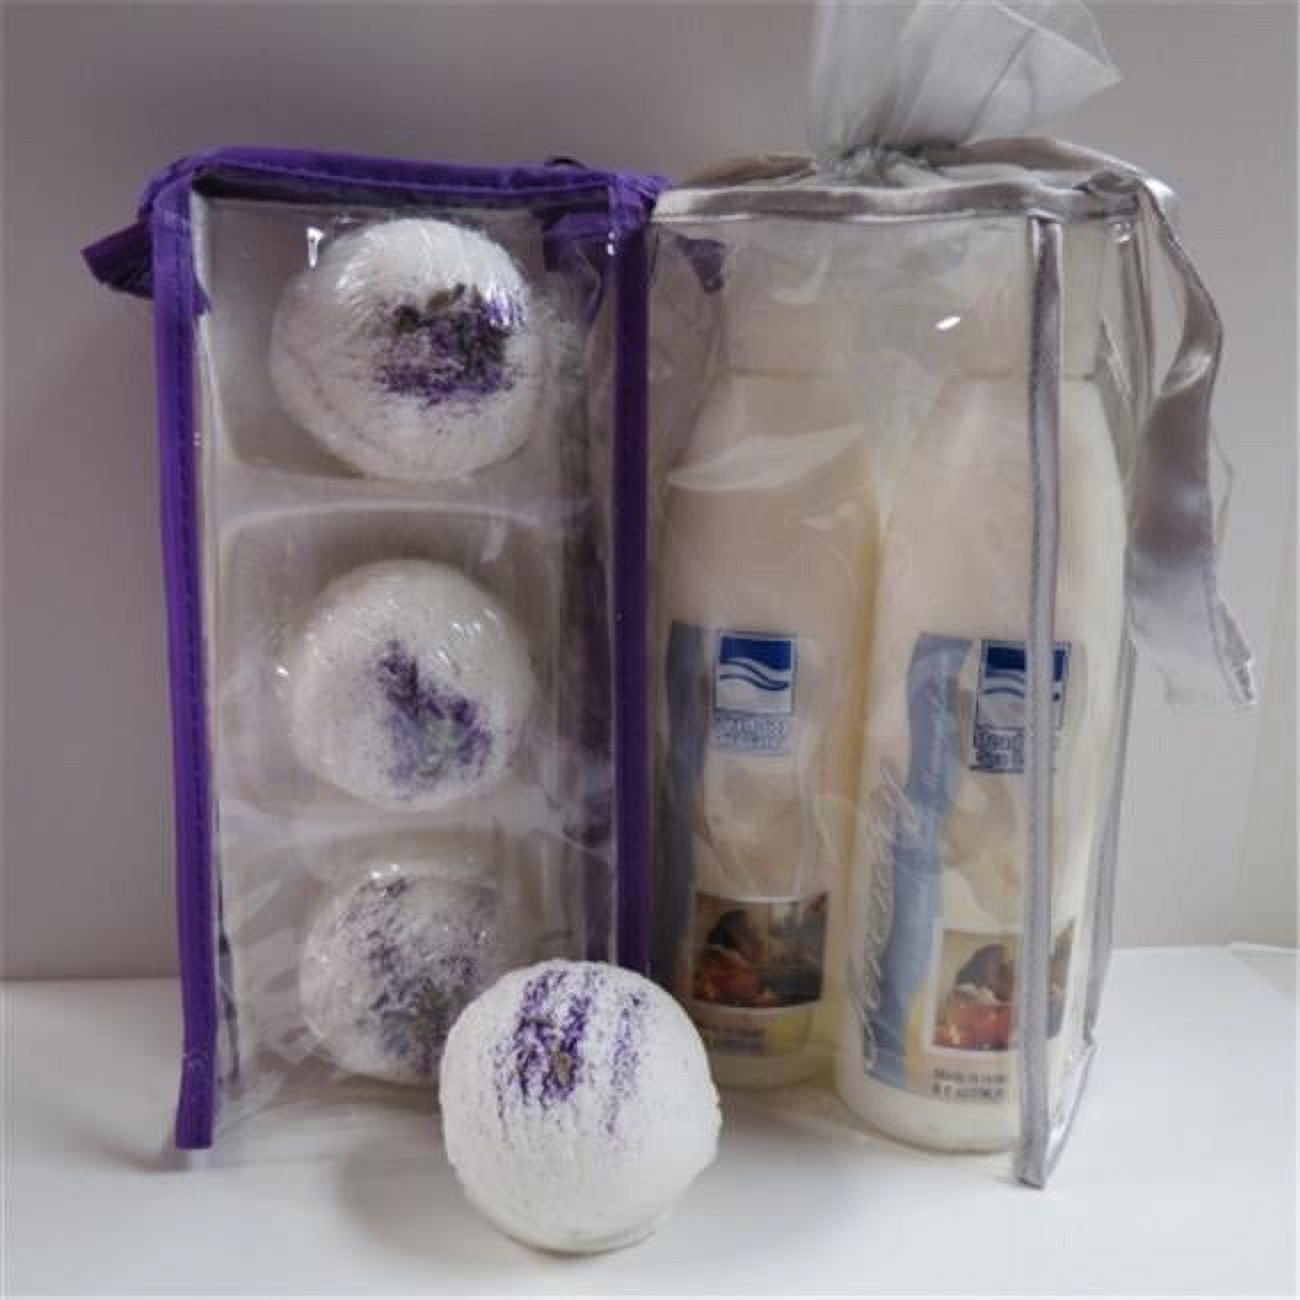 Deadsea-bbtlp02 3 Pack Lavender Pomegranates Bubble Bath Truffles, 2 Pack 8 Oz Serenity Hand & Body Massage Lotion